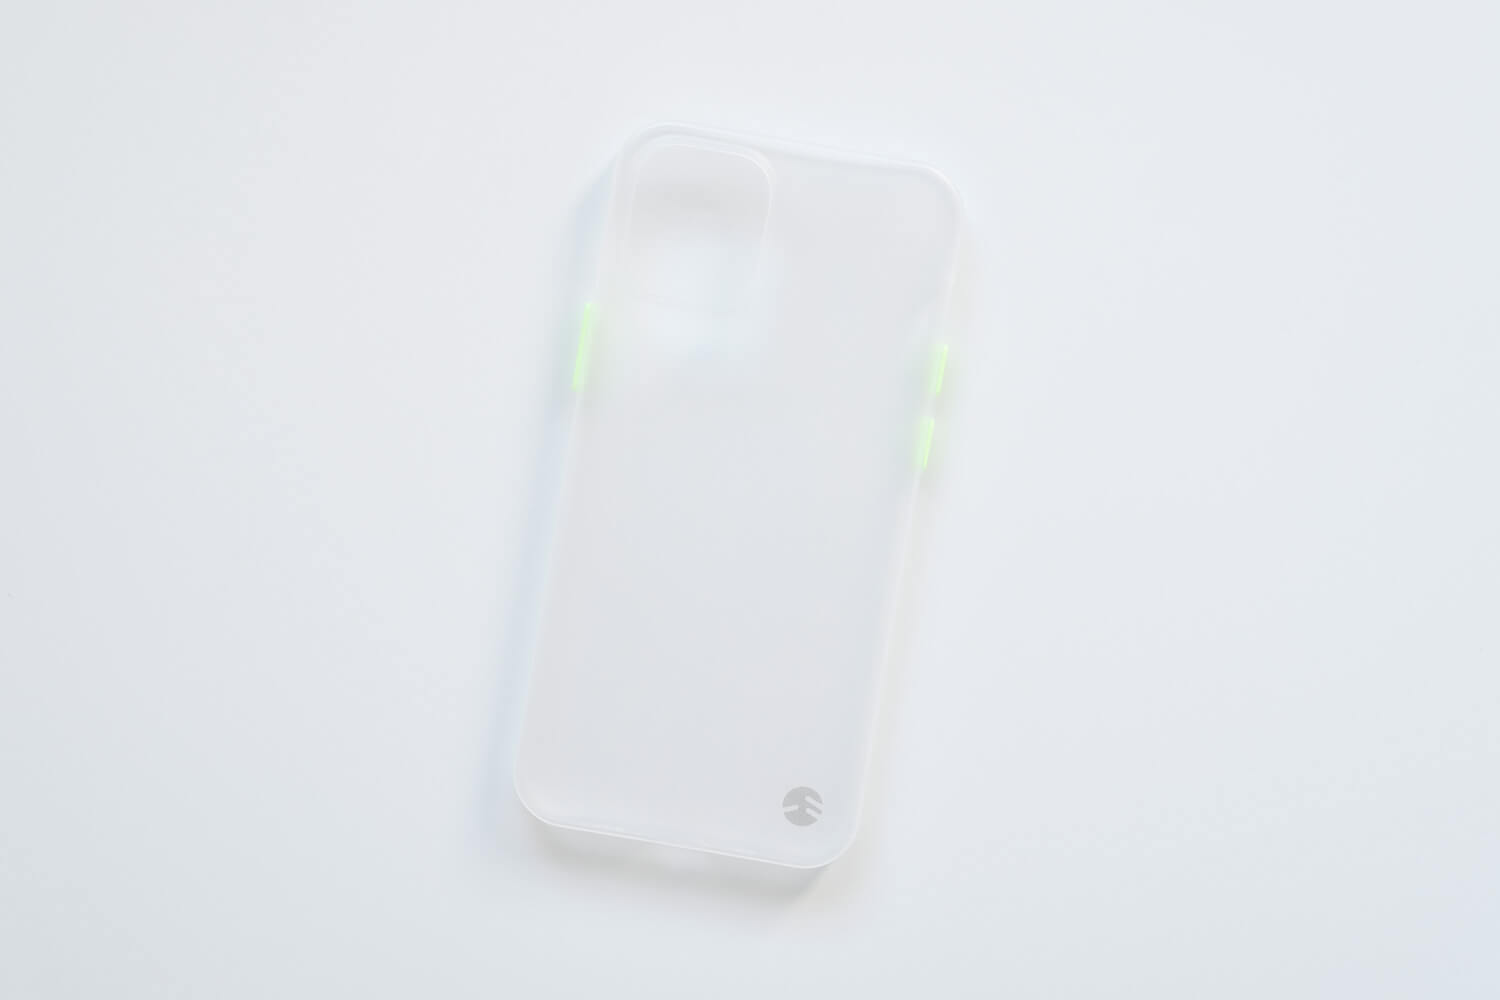 SwitchEasy 0.35mmiPhoneケースは半透明で白背景だと見づらい